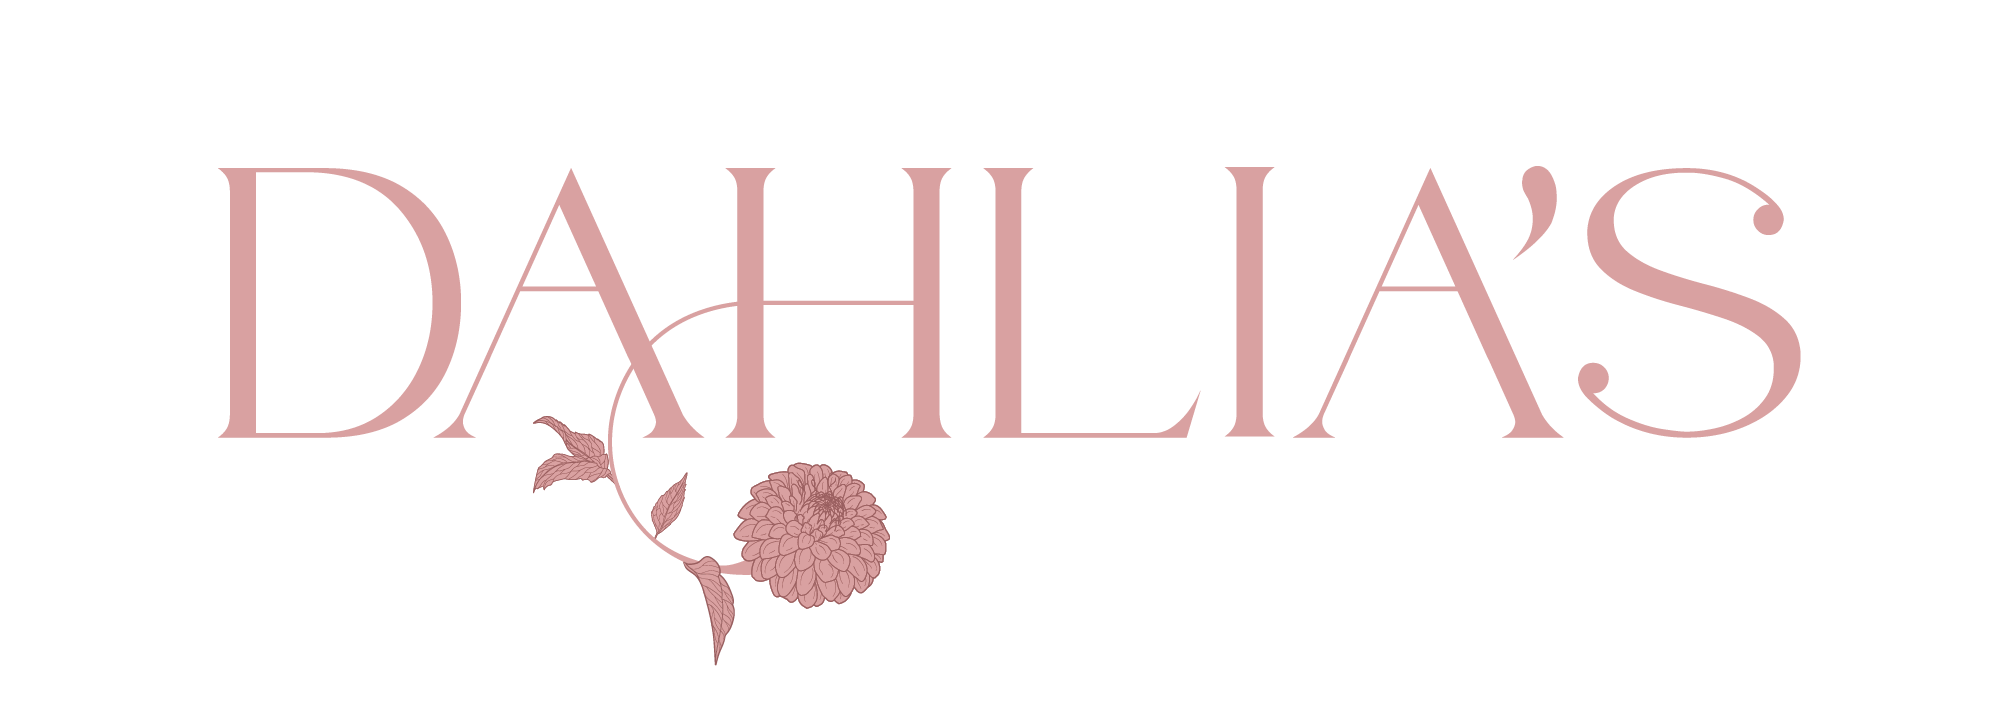 Dahlia's logo top